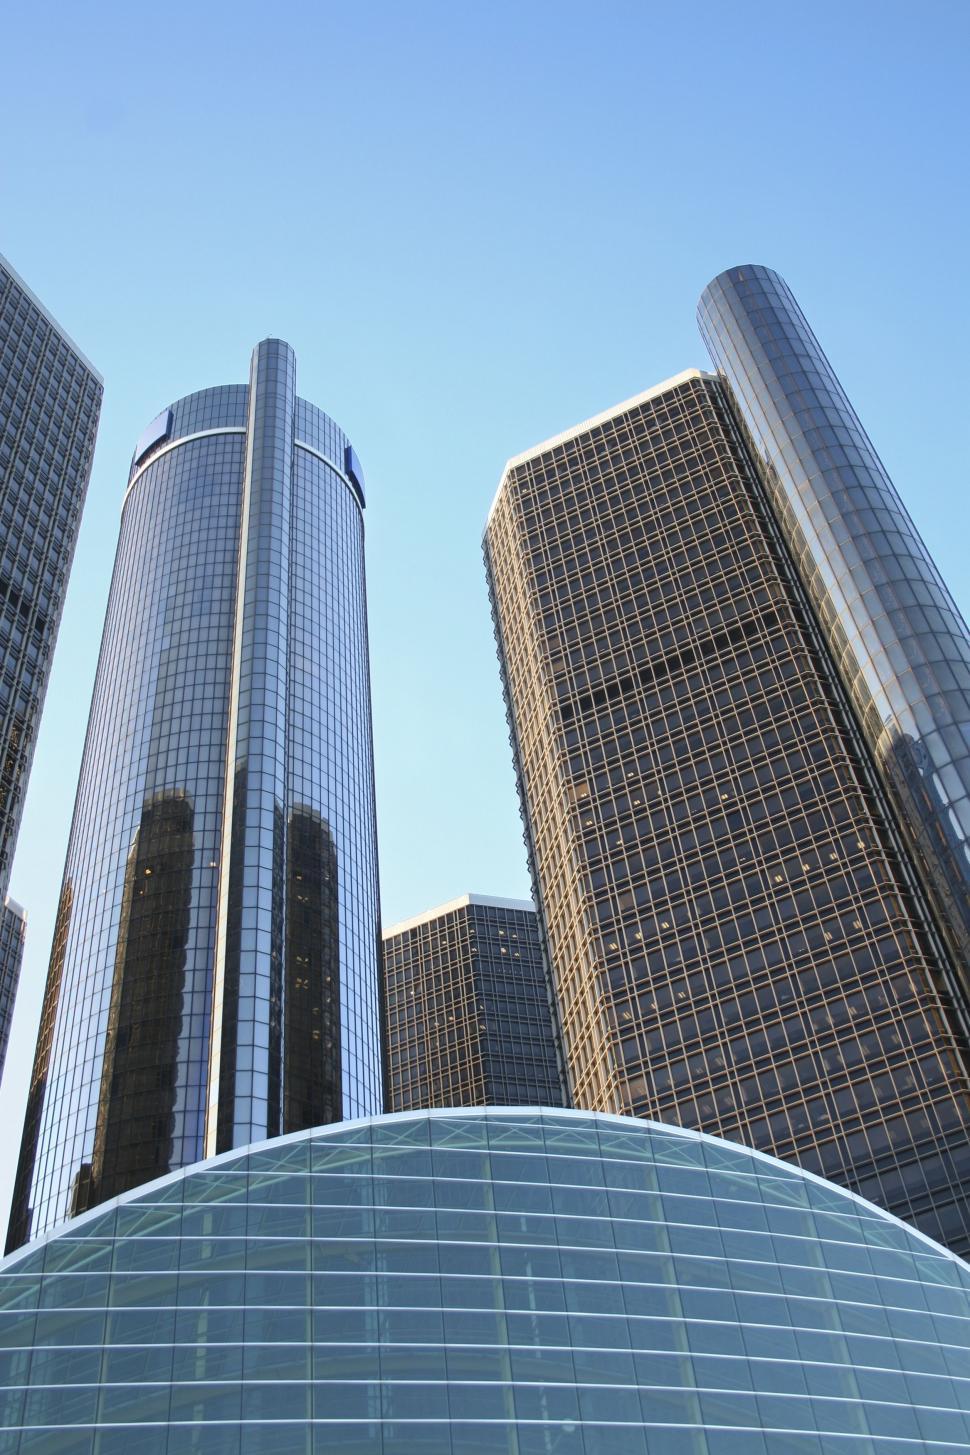 Free Image of General Motors Headquarter Building 